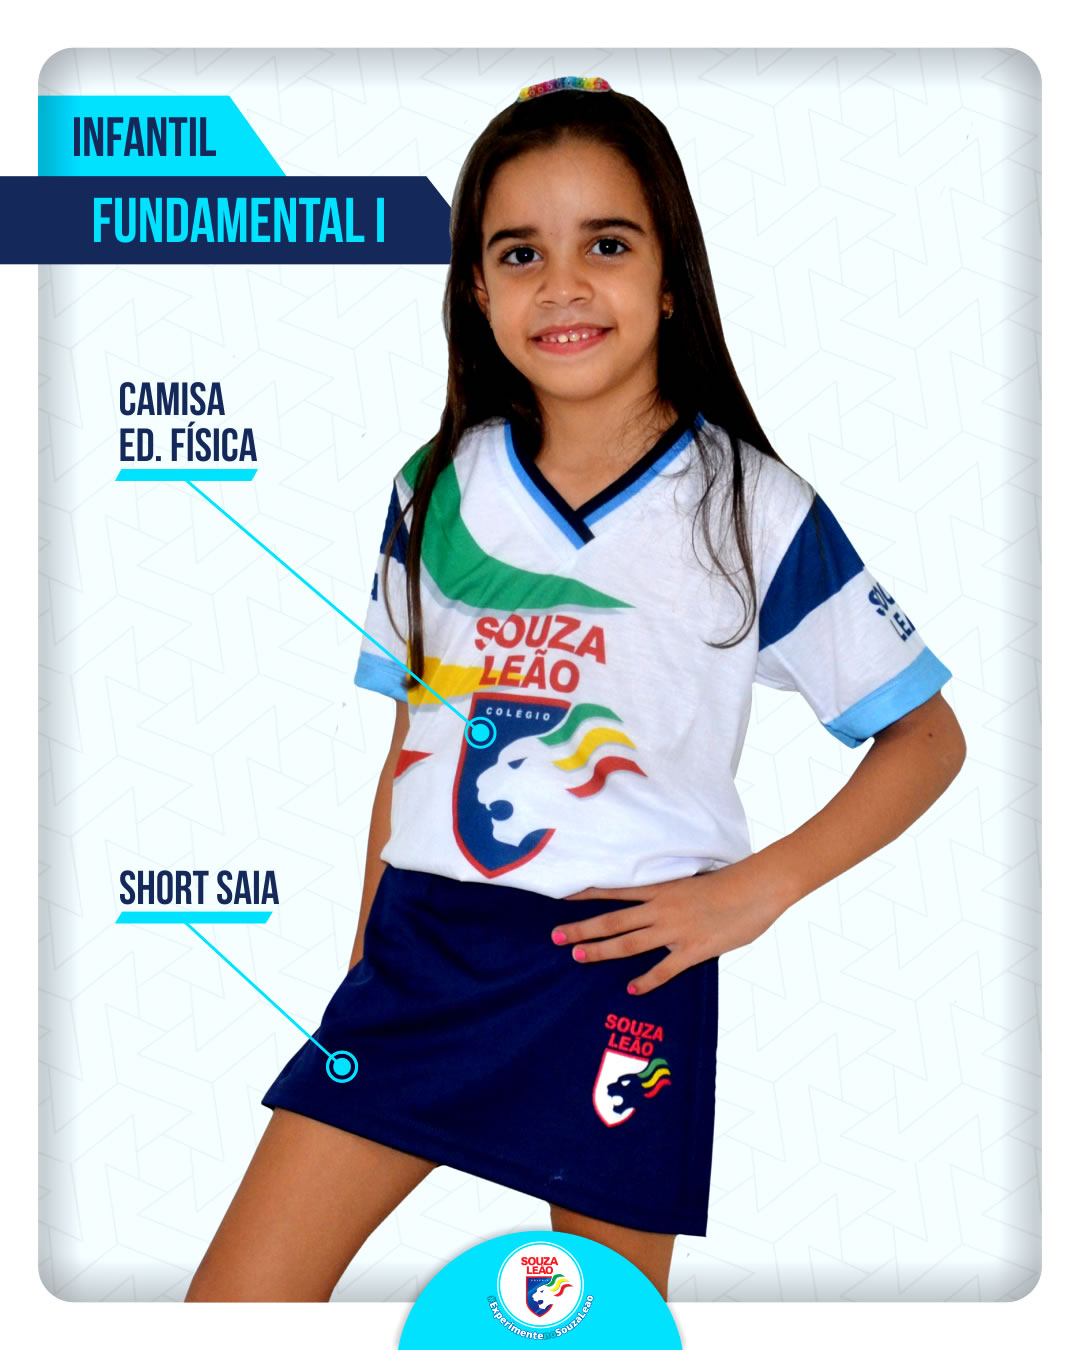 Camisa Ed Fuica Short Saia Infantil Fundamental 1